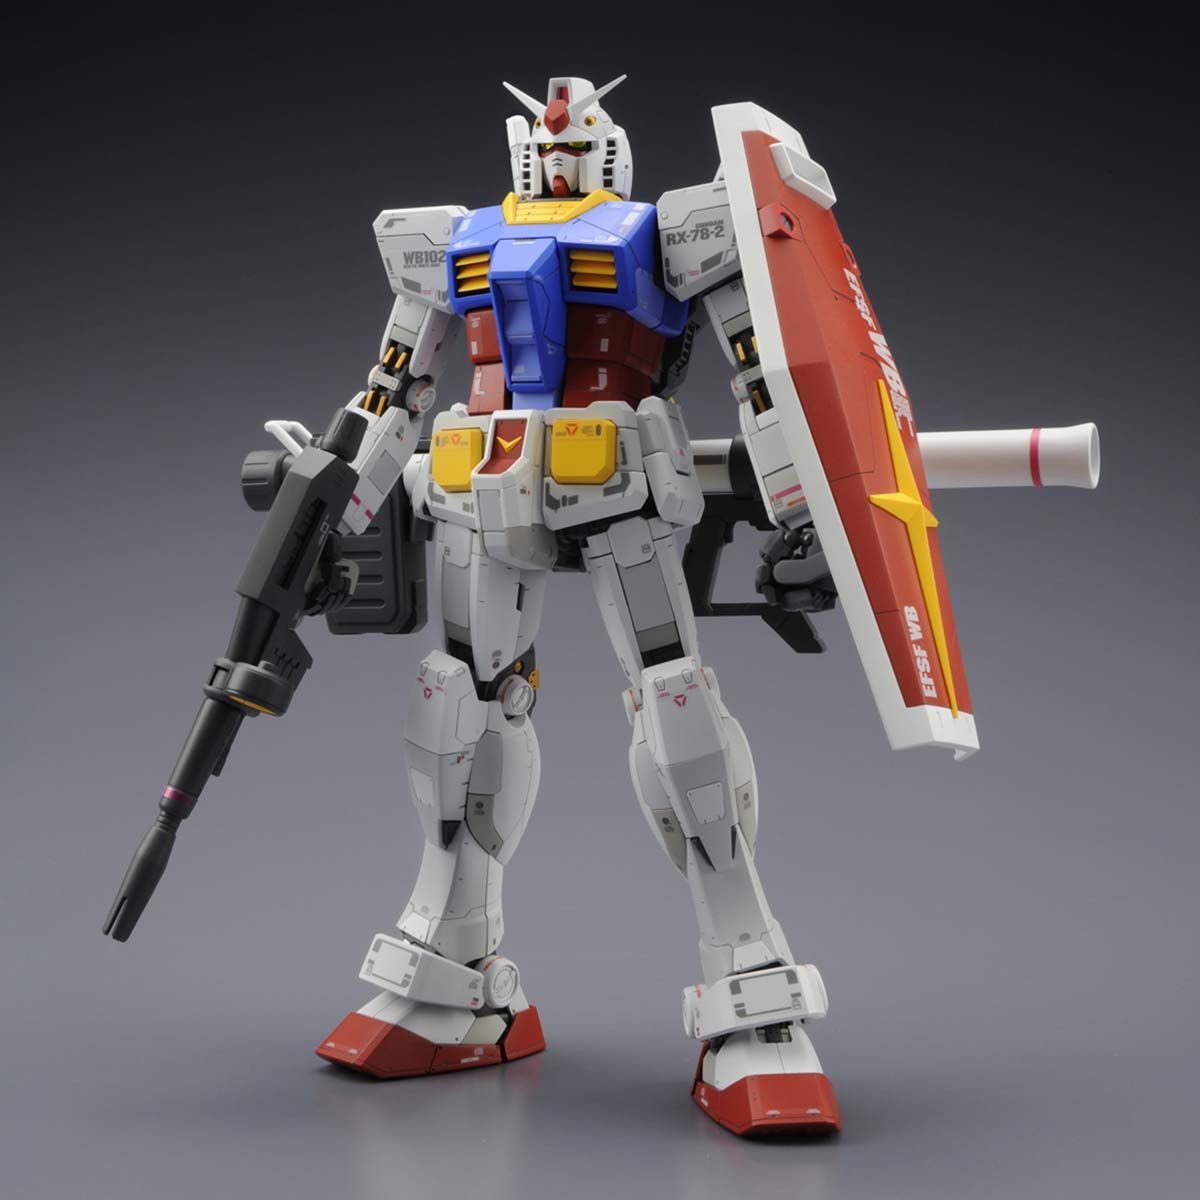 MG 1/100 No.172 RX-78-2 Gundam Ver.3.0